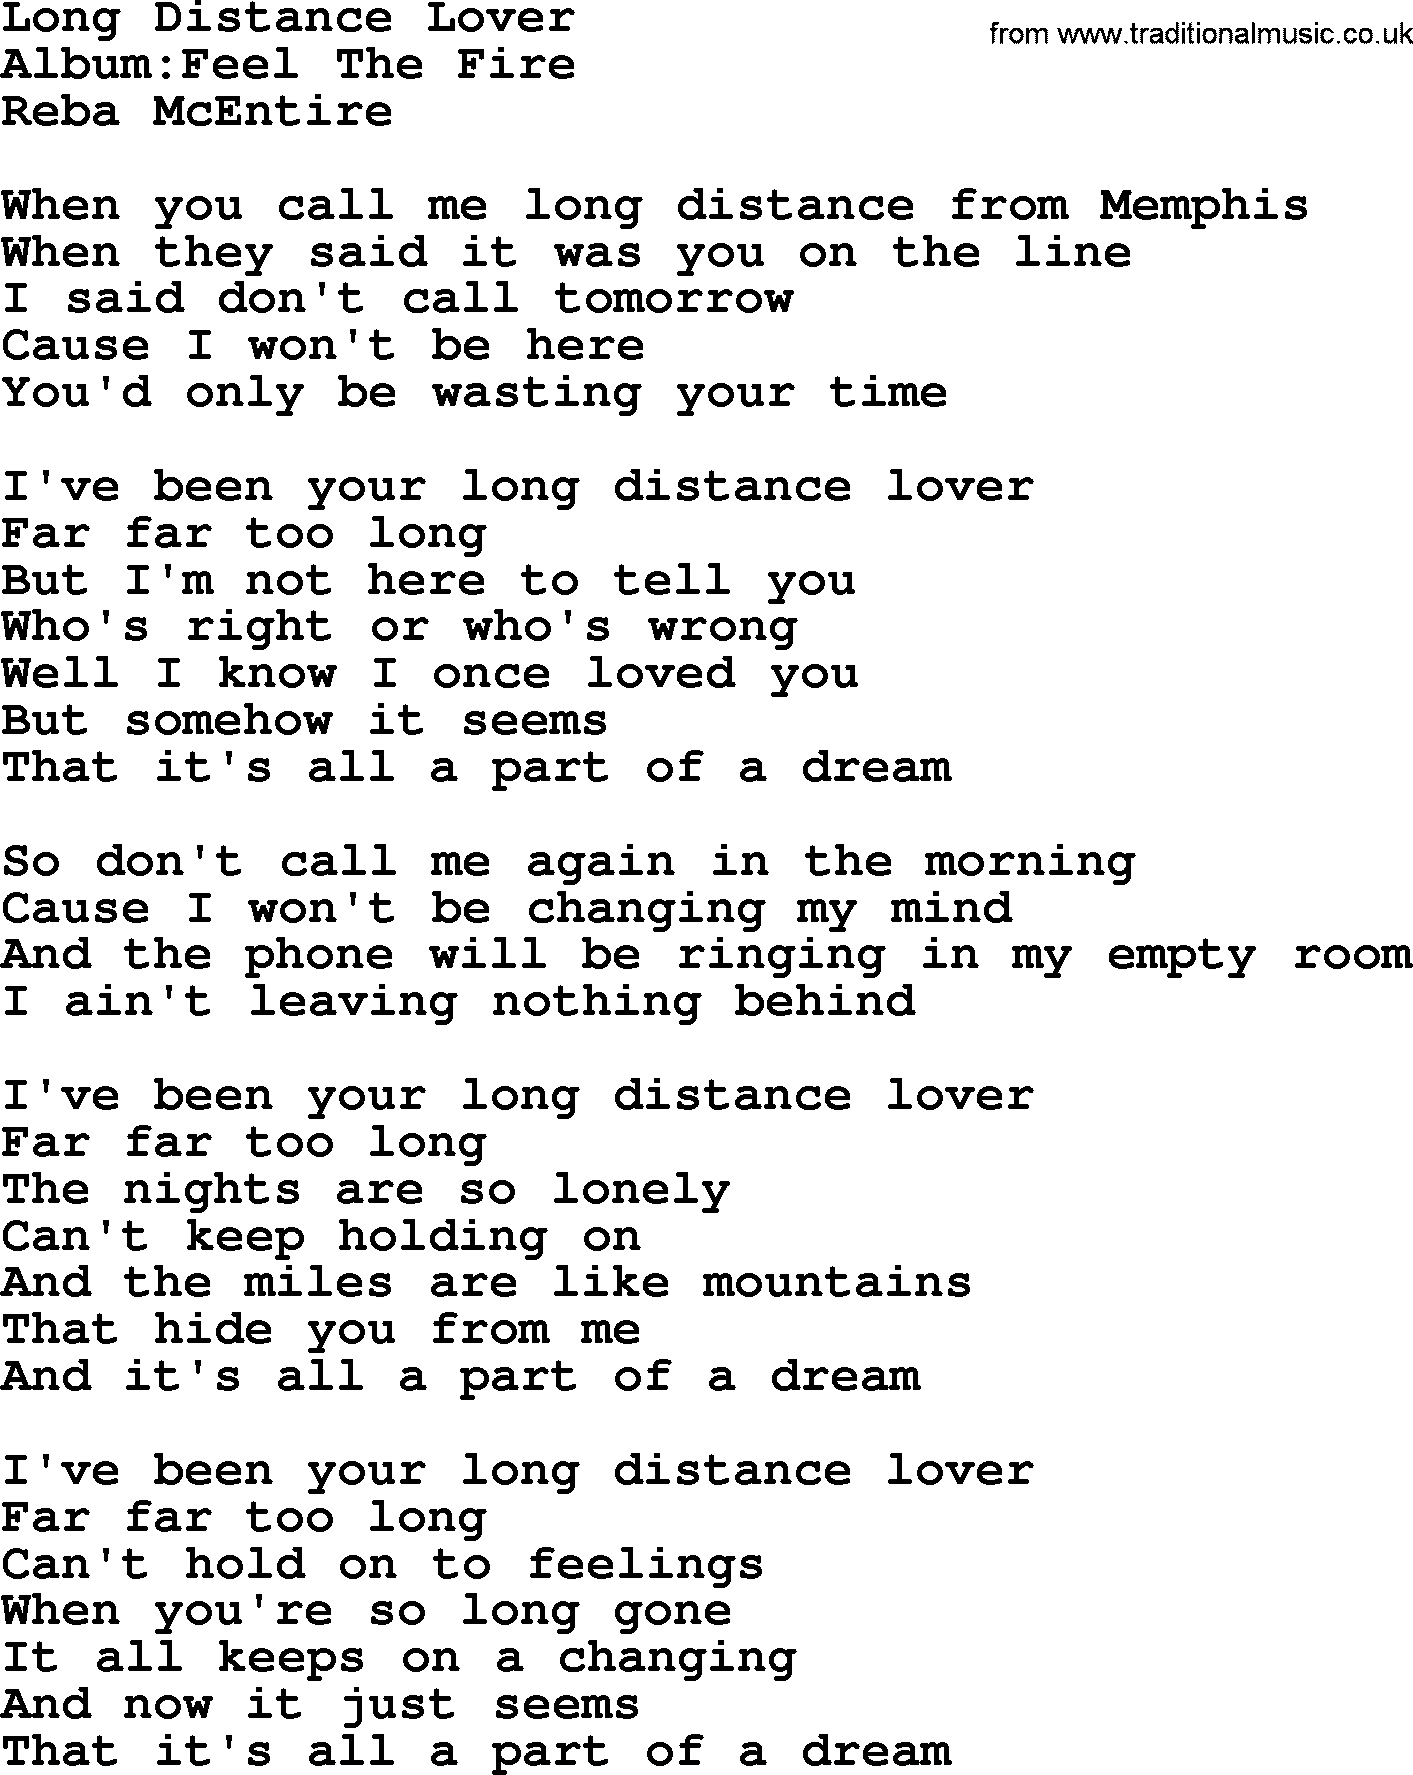 Reba McEntire song: Long Distance Lover lyrics